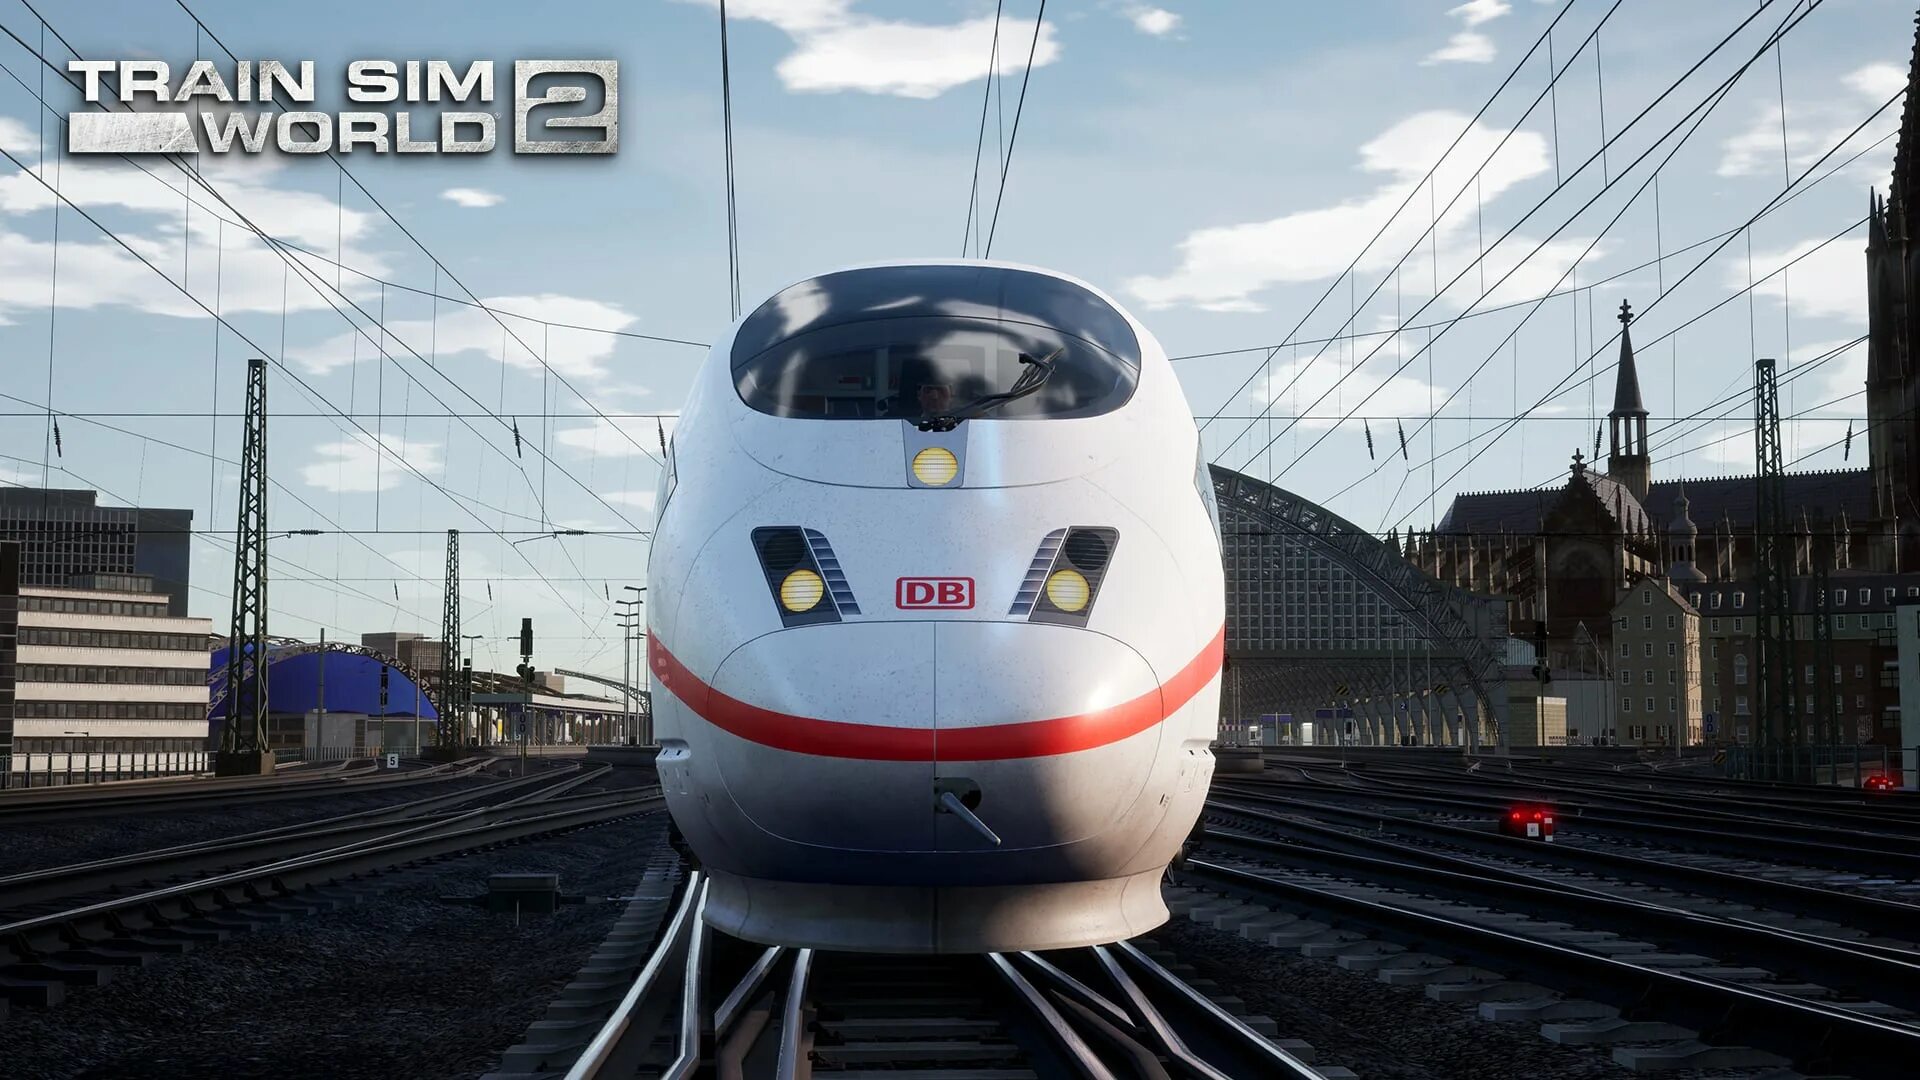 Траин ворлд. Train SIM World 2 РЖД. Ice 3 Train SIM World. Train SIM World® 2: CSX c40-8w. Train Simulator World 2.